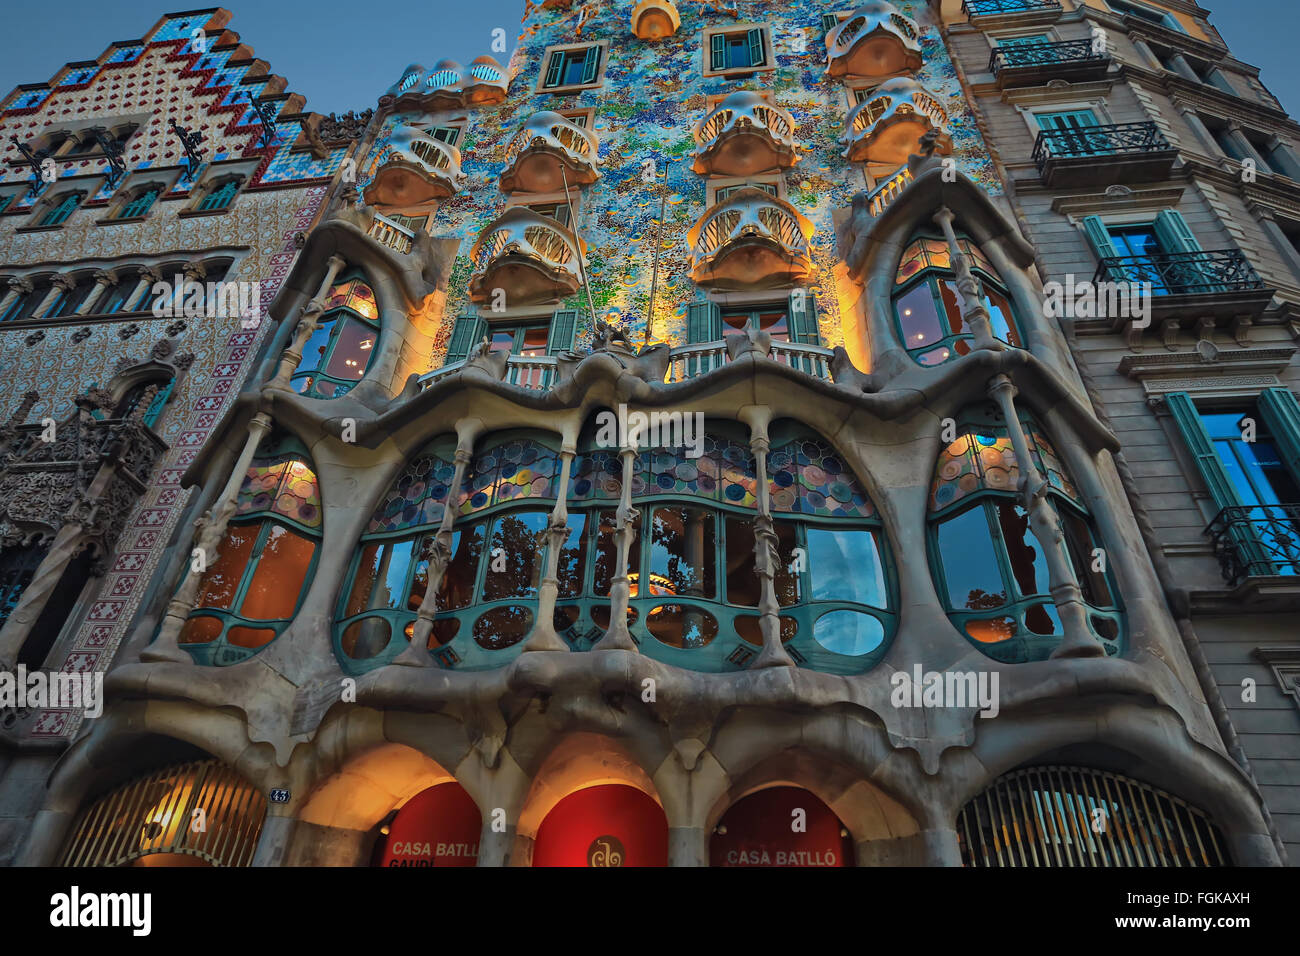 Gaudi project.The facade of the famous building Casa Battlo designed by Antonio Gaudi in Barcelona Stock Photo